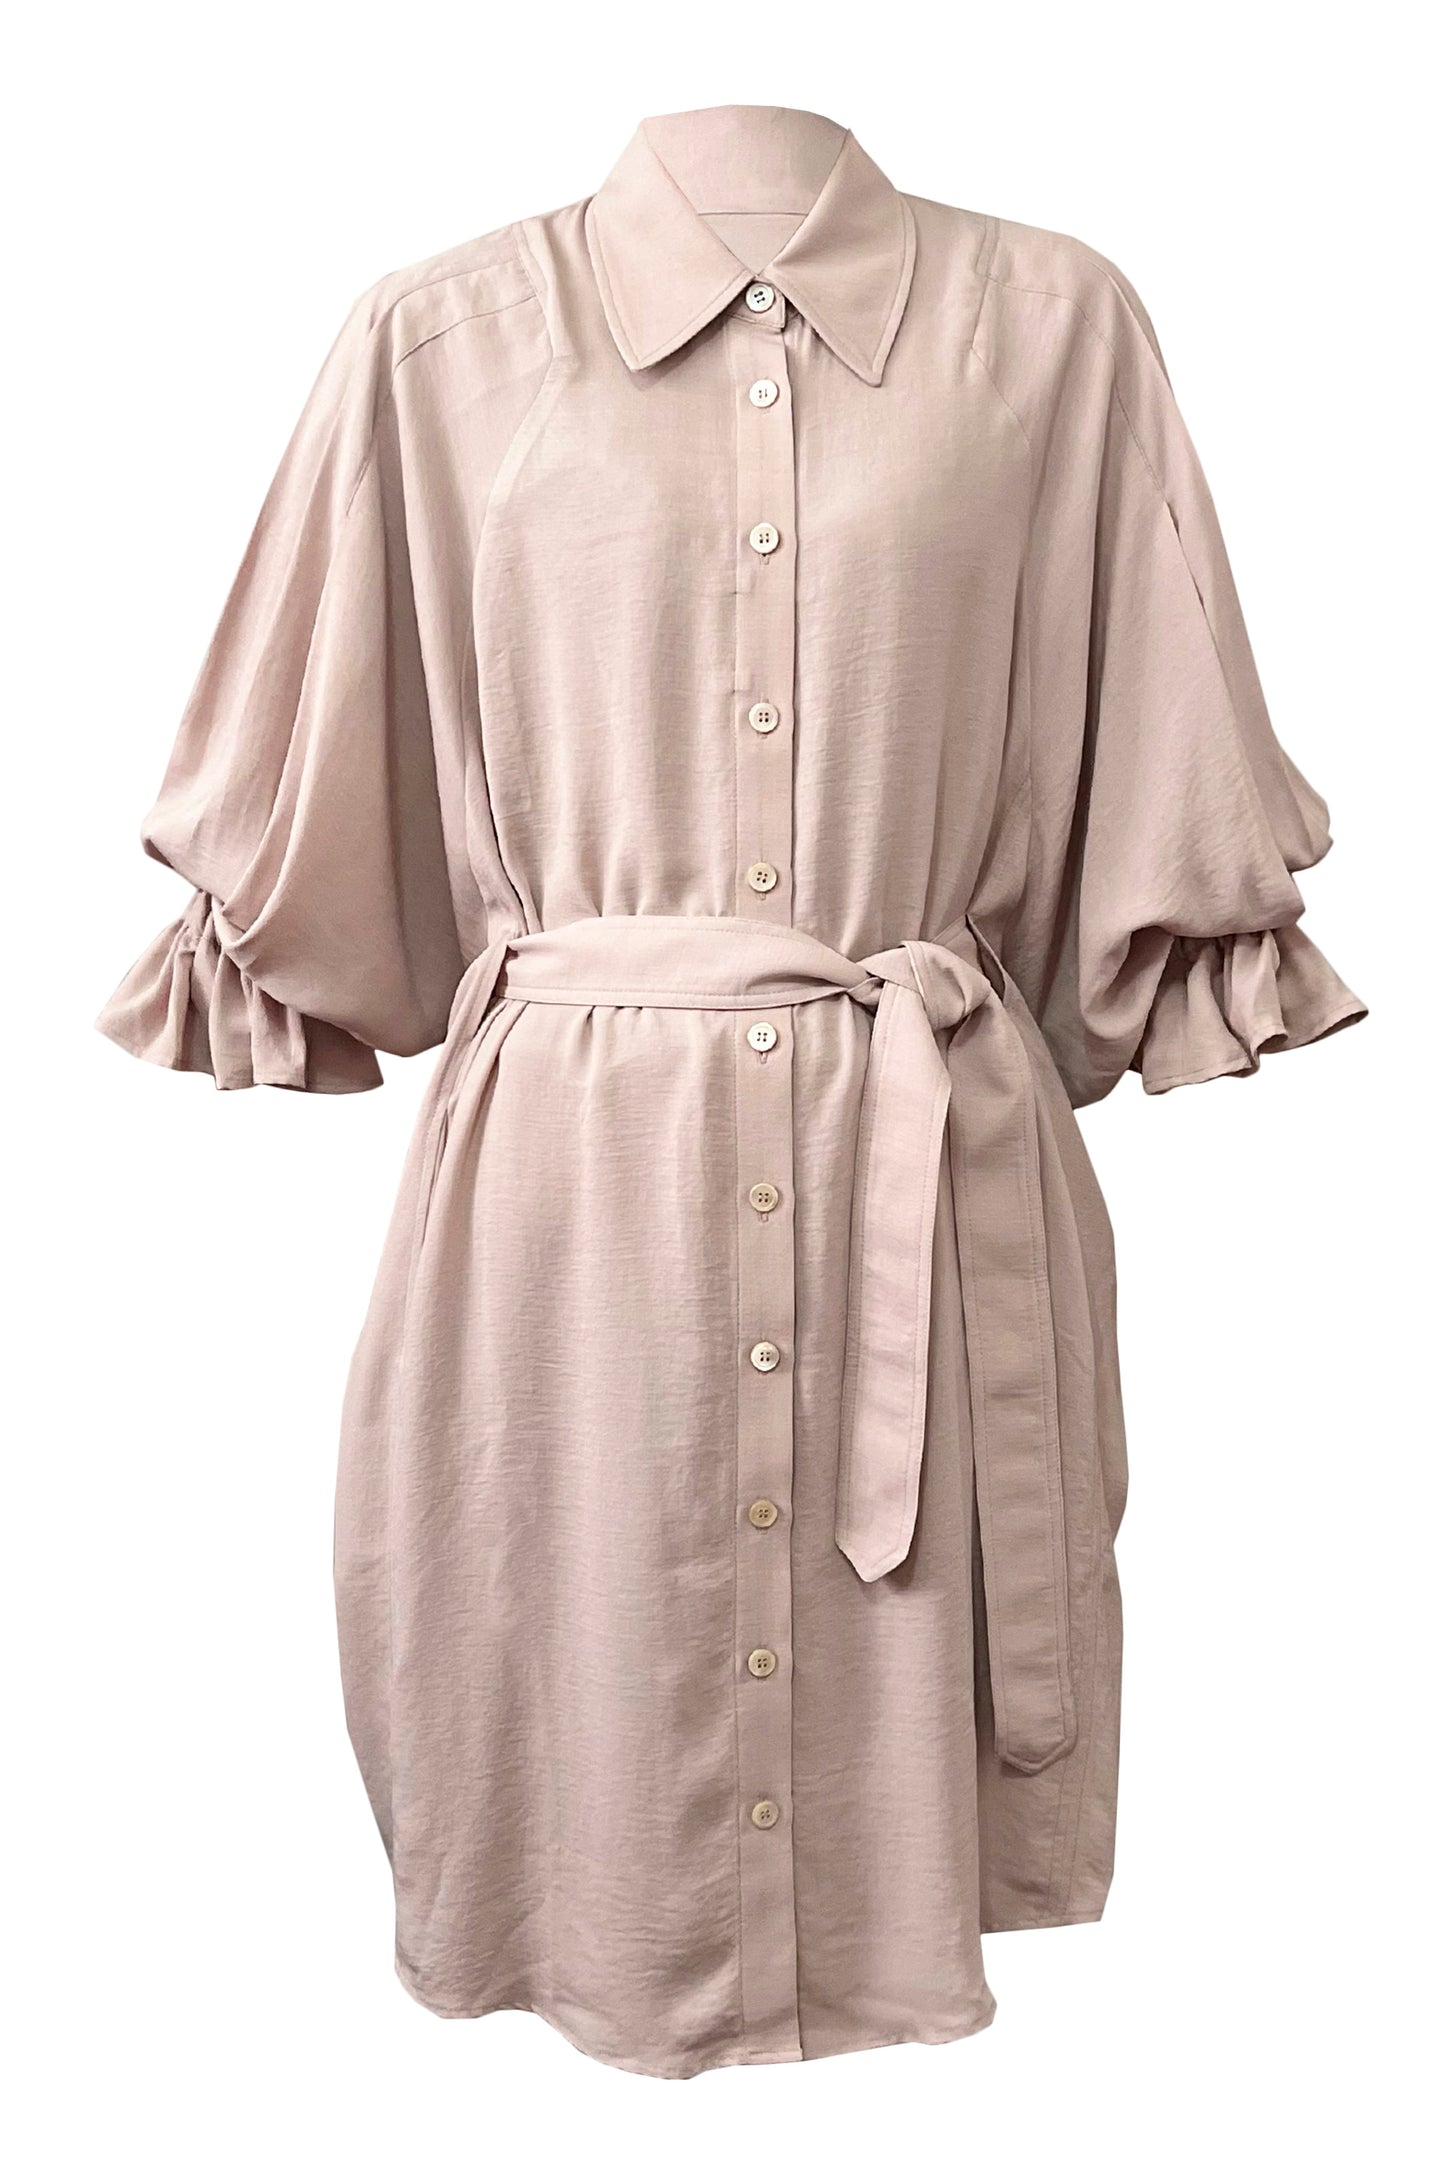 Two-way crepe shirt dress with Purepecha artisan woven tape